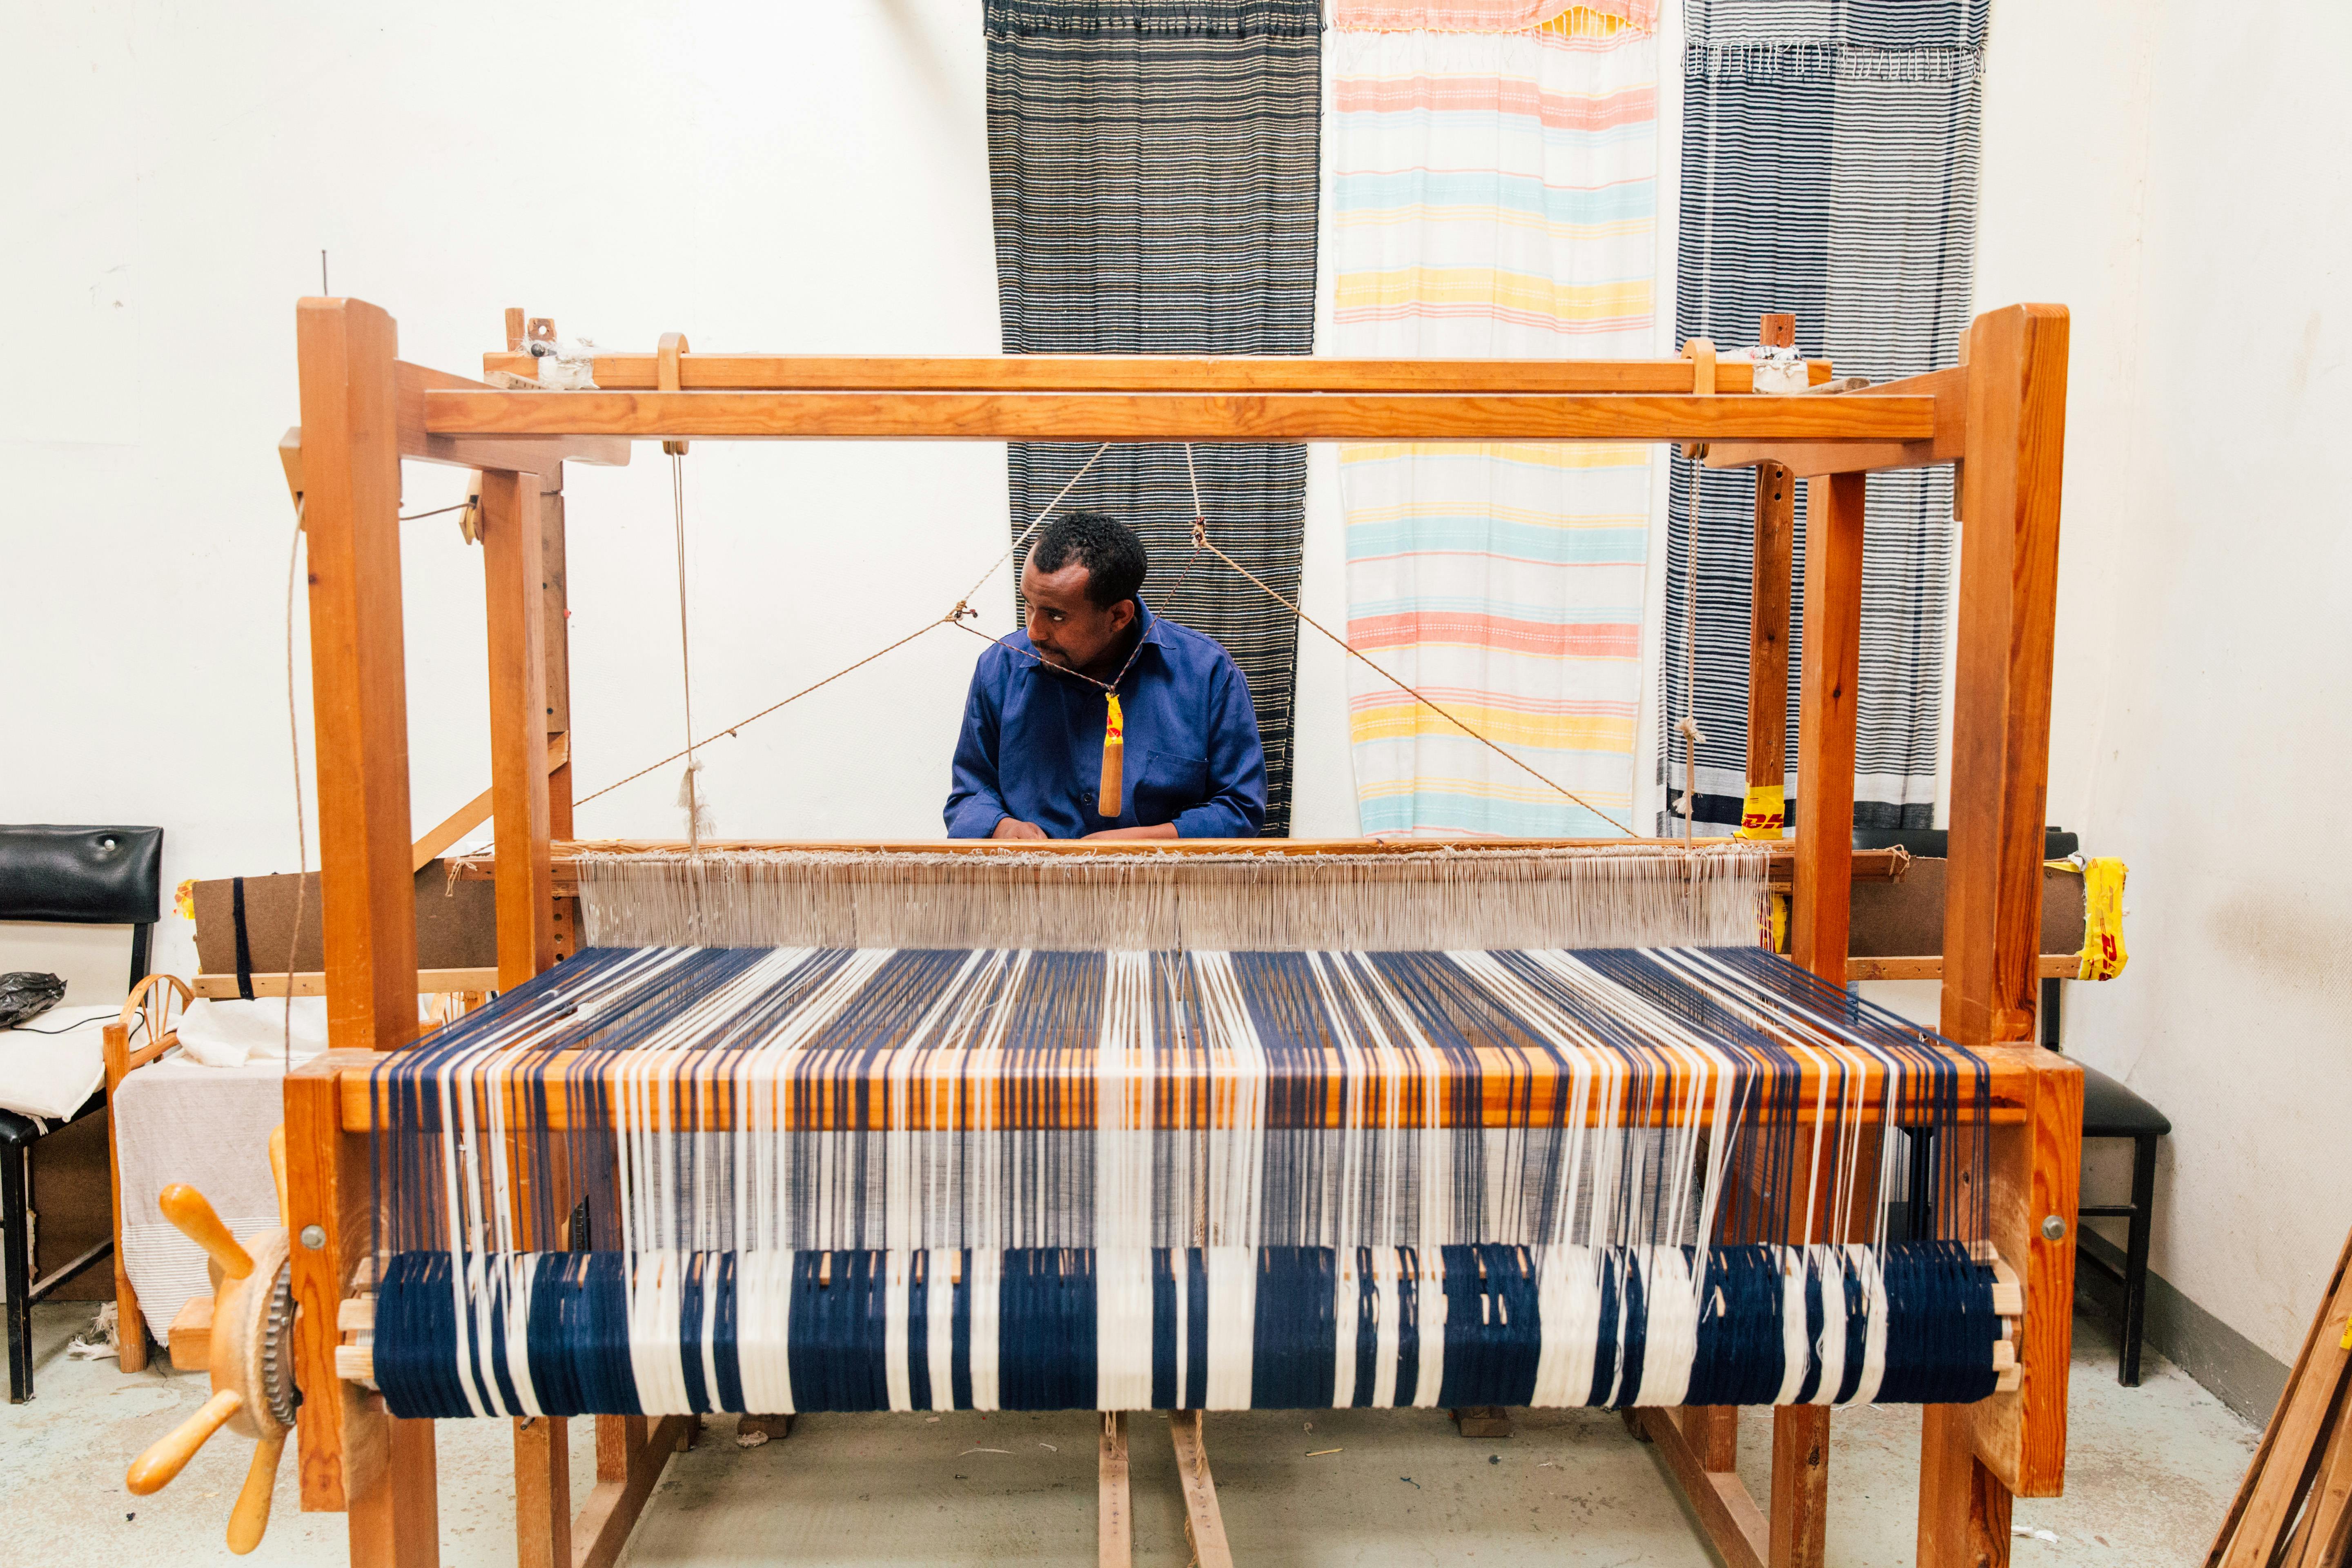 ethnic craftsman working on loom in workshop